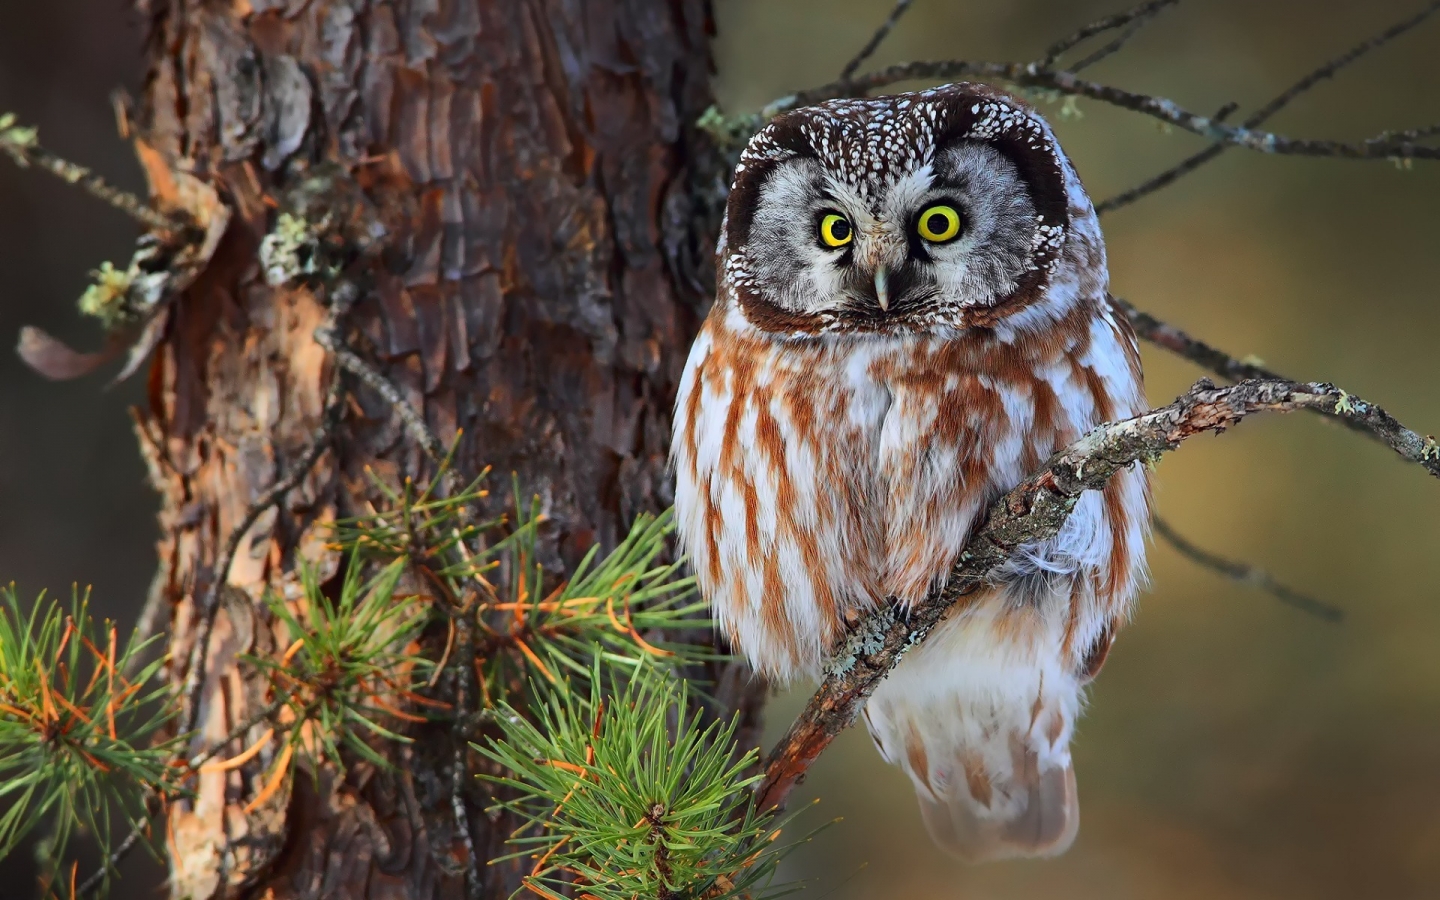 Cute Little Owl for 1440 x 900 widescreen resolution